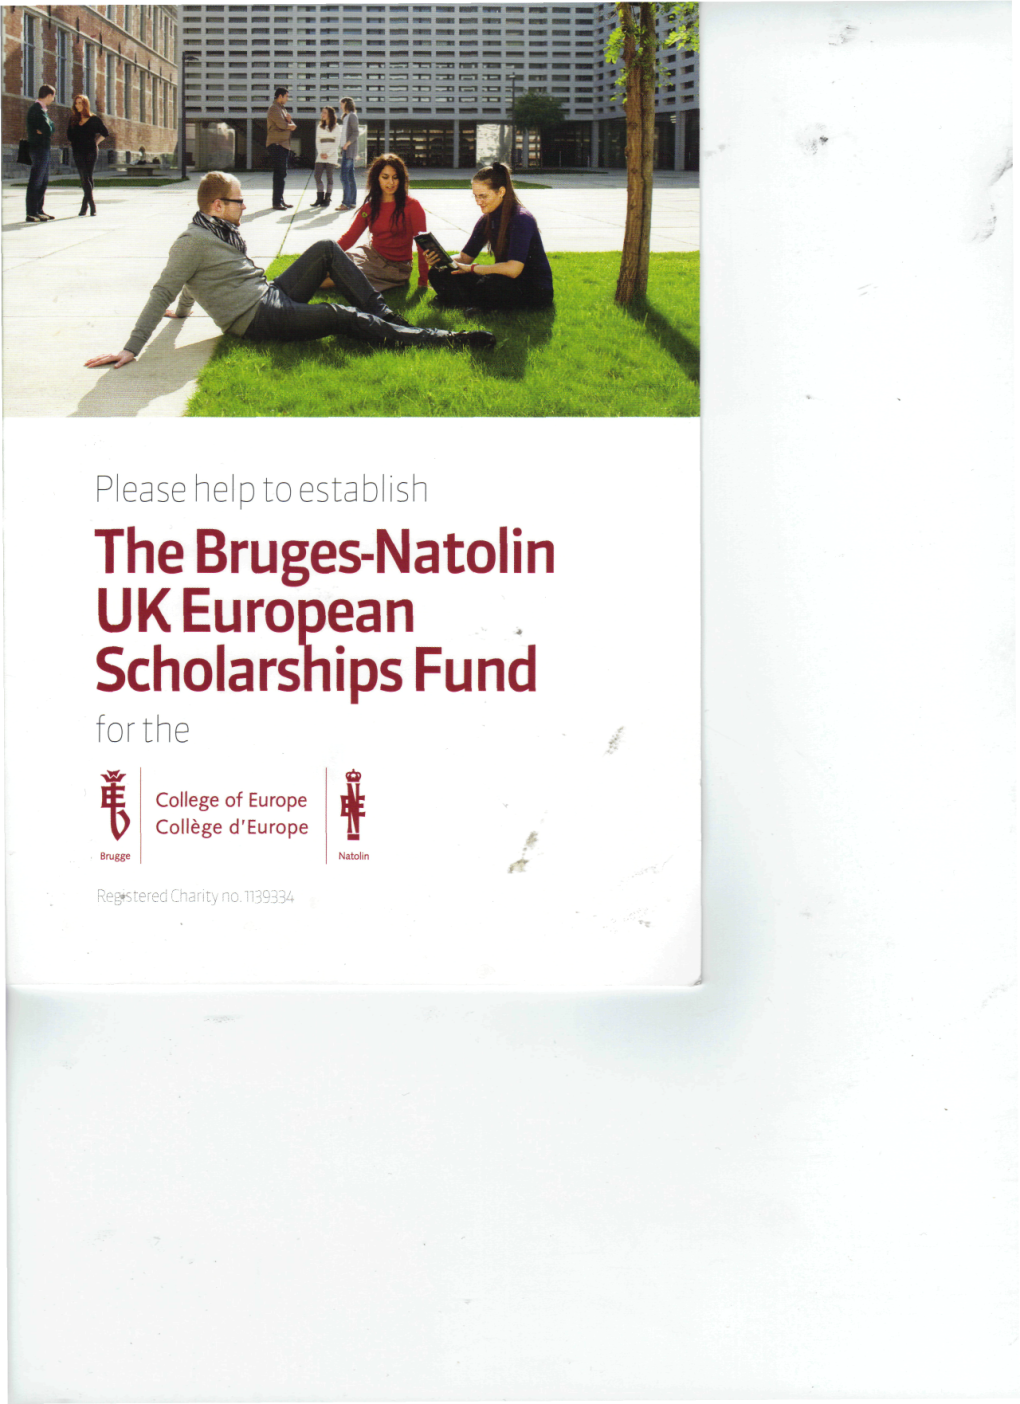 The Bruges-Natolin UK European Scholarships Fund for The